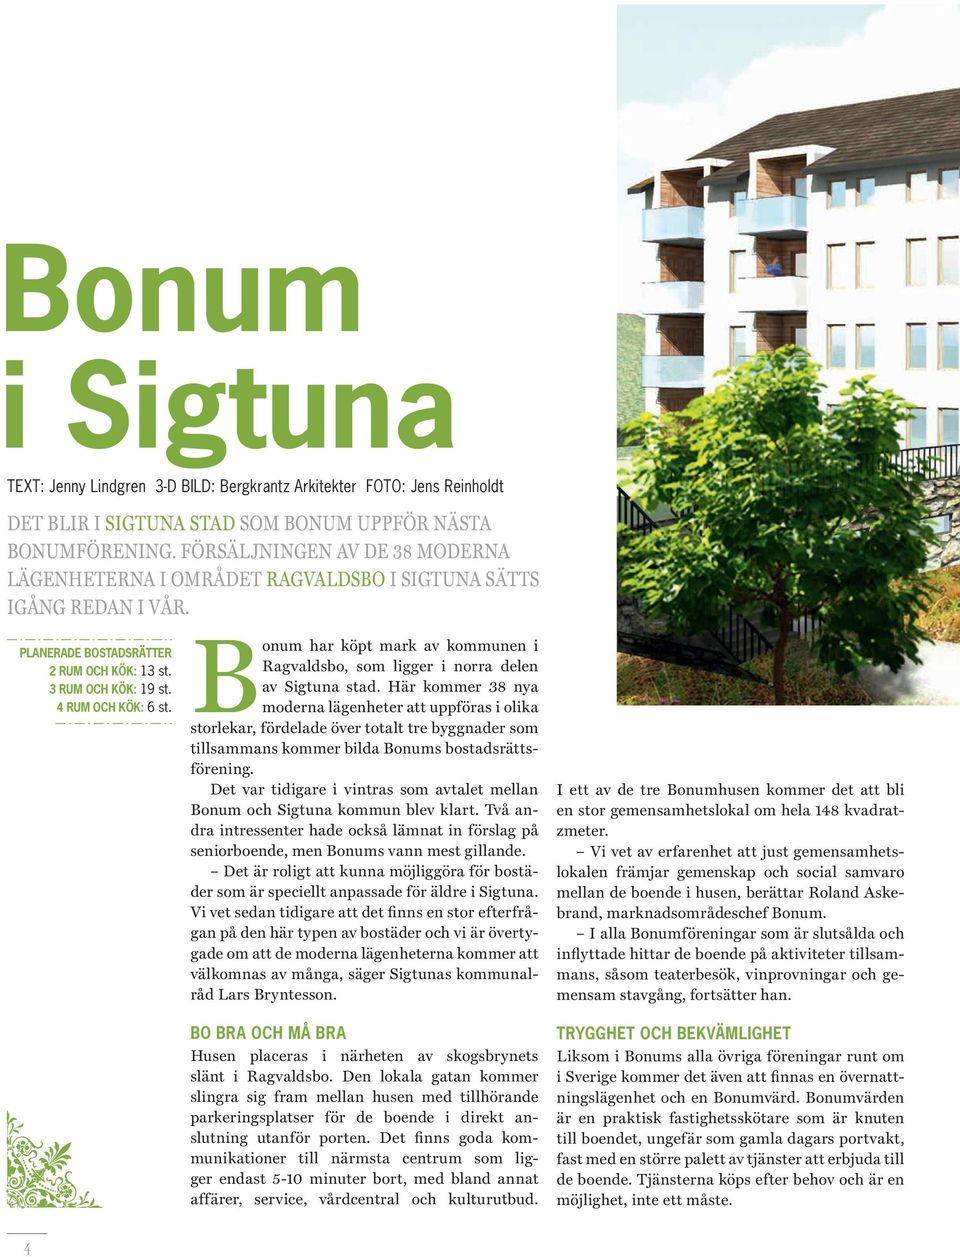 Bonum har köpt mark av kommunen i Ragvaldsbo, som ligger i norra delen av Sigtuna stad.